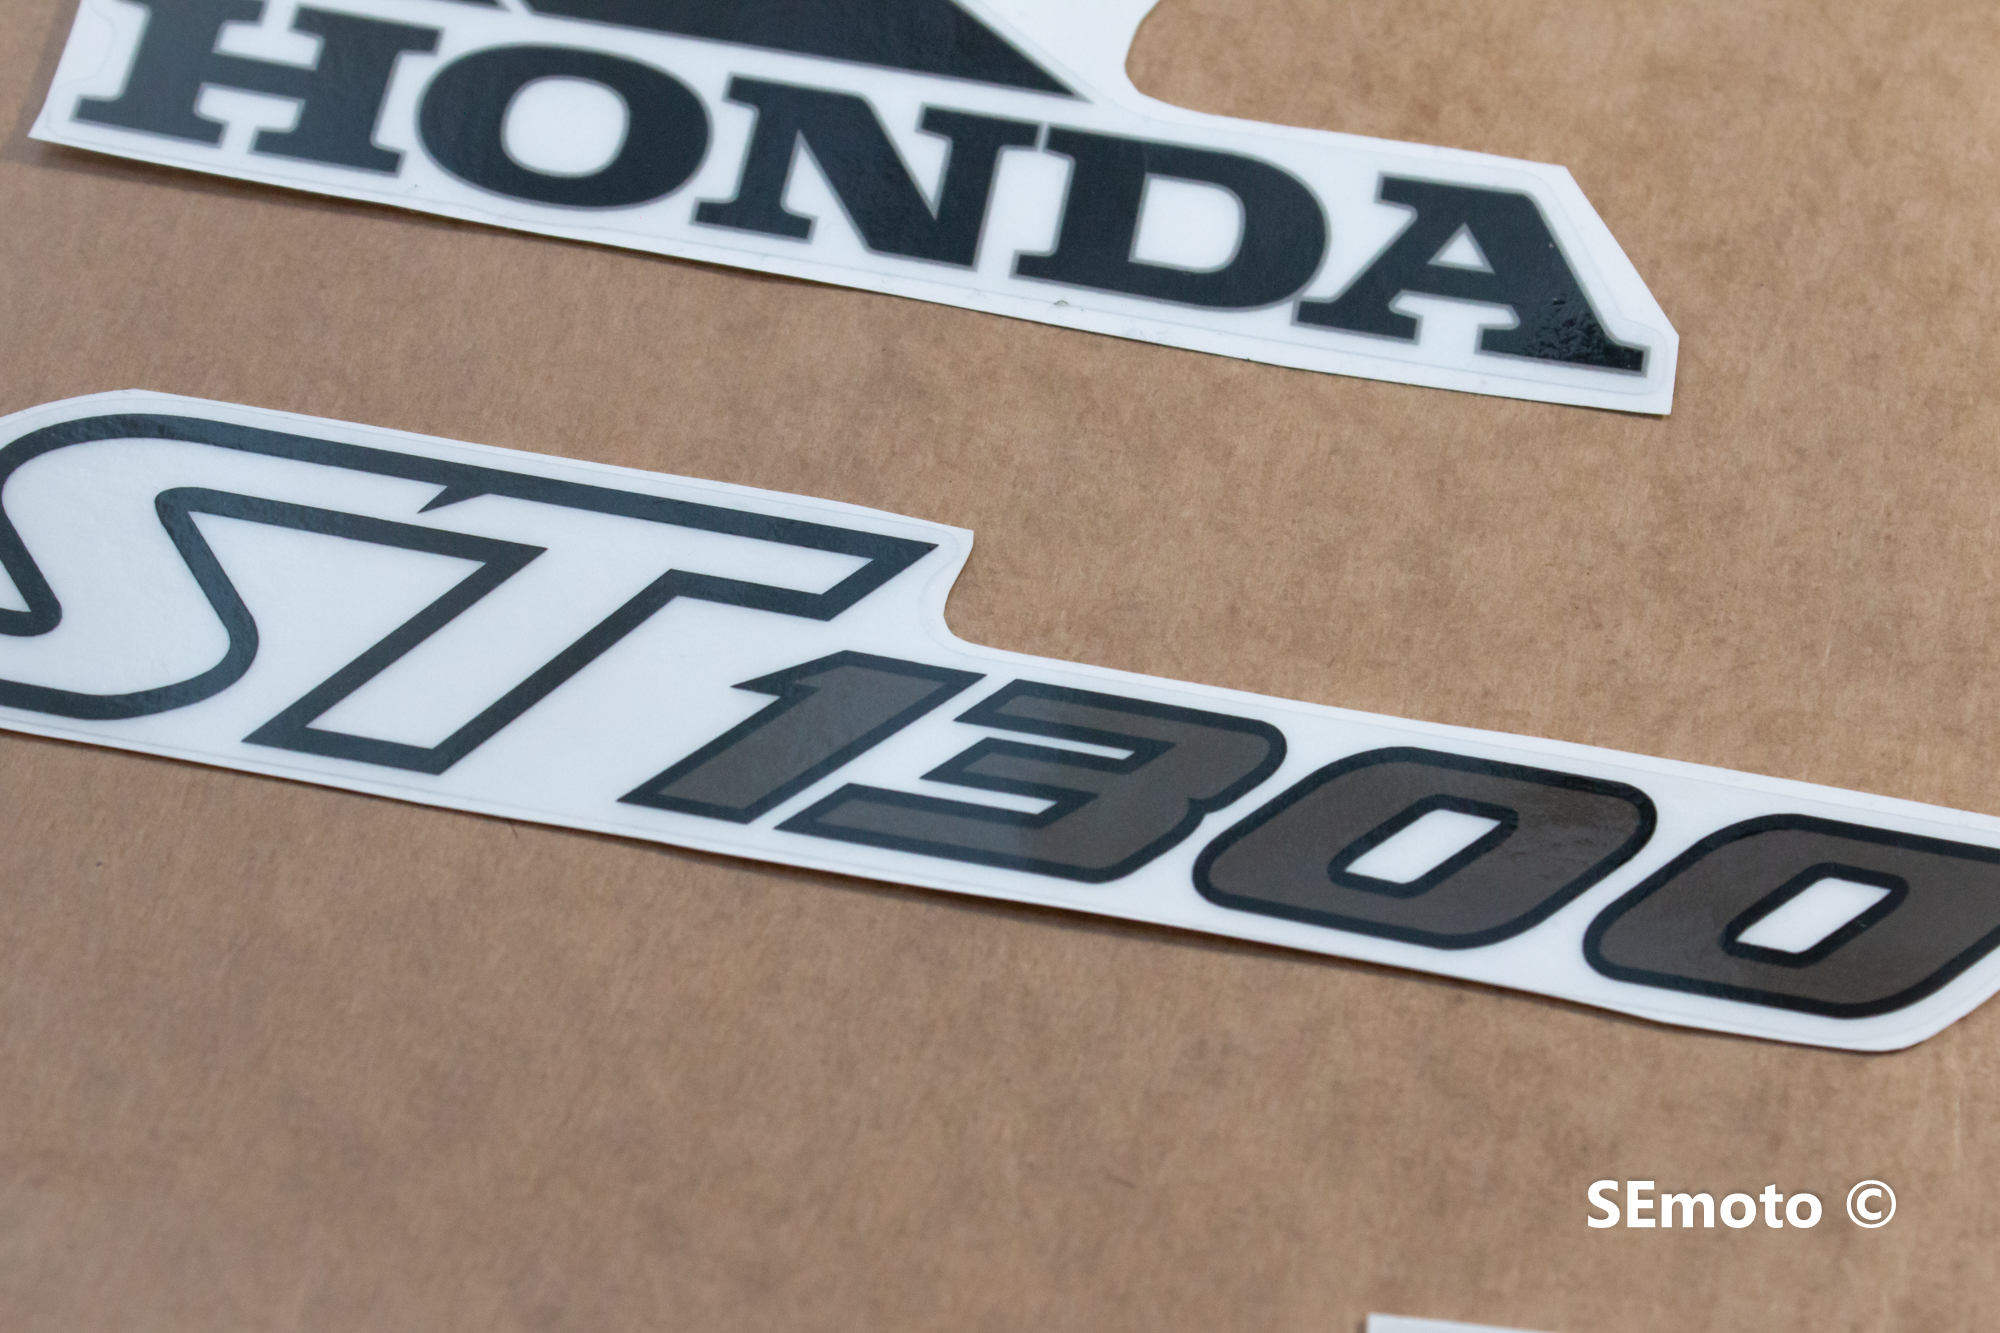 Honda ST 1300 Серебро- фото6